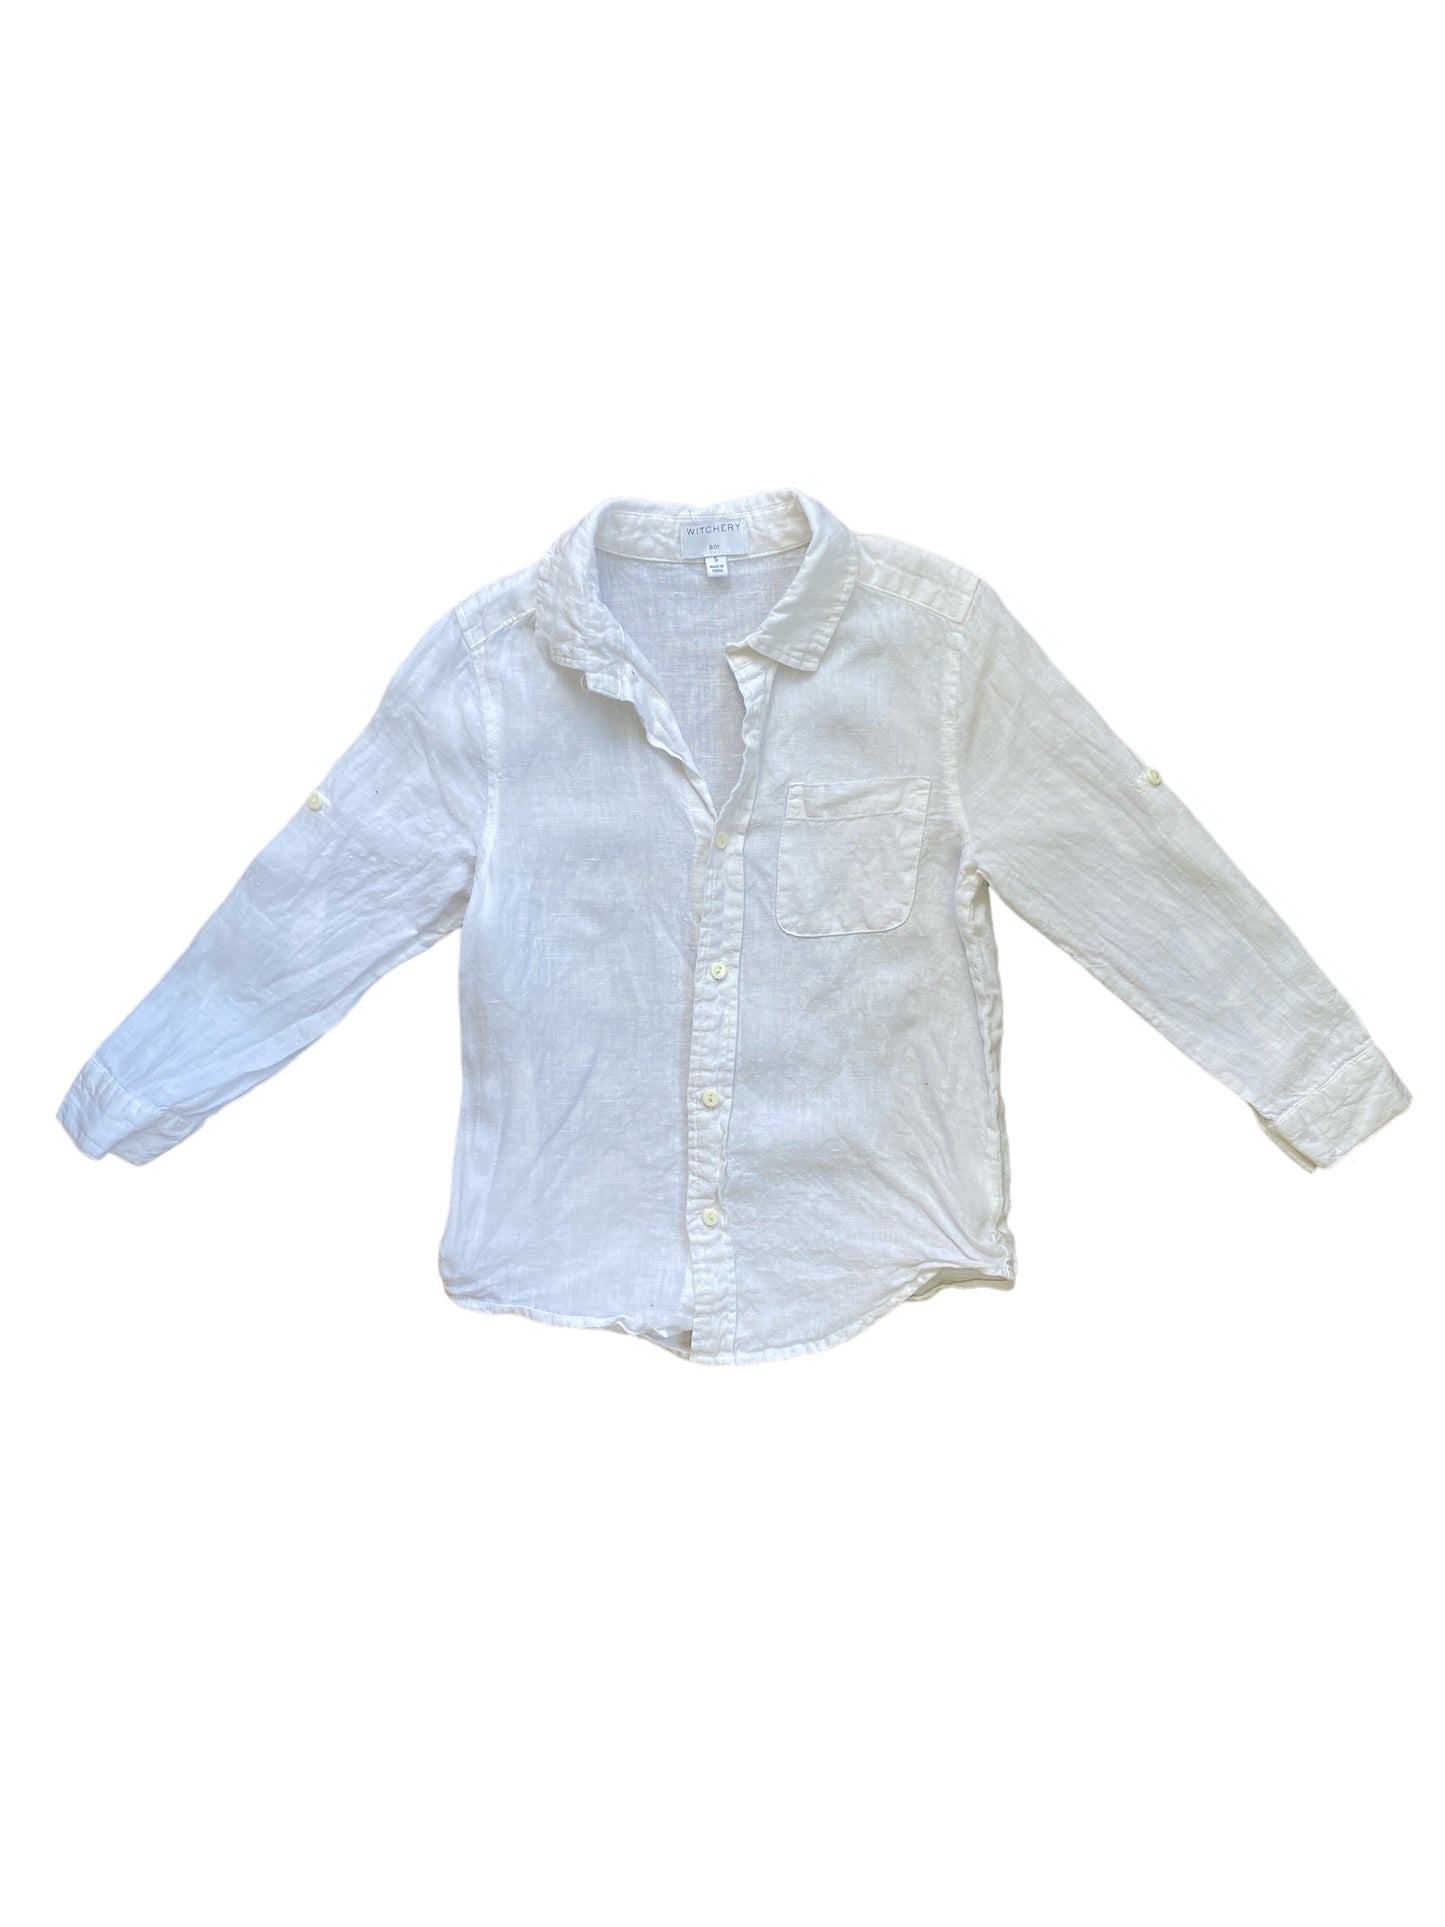 Witchery white linen shirt | Size: 4-5 years | GUC